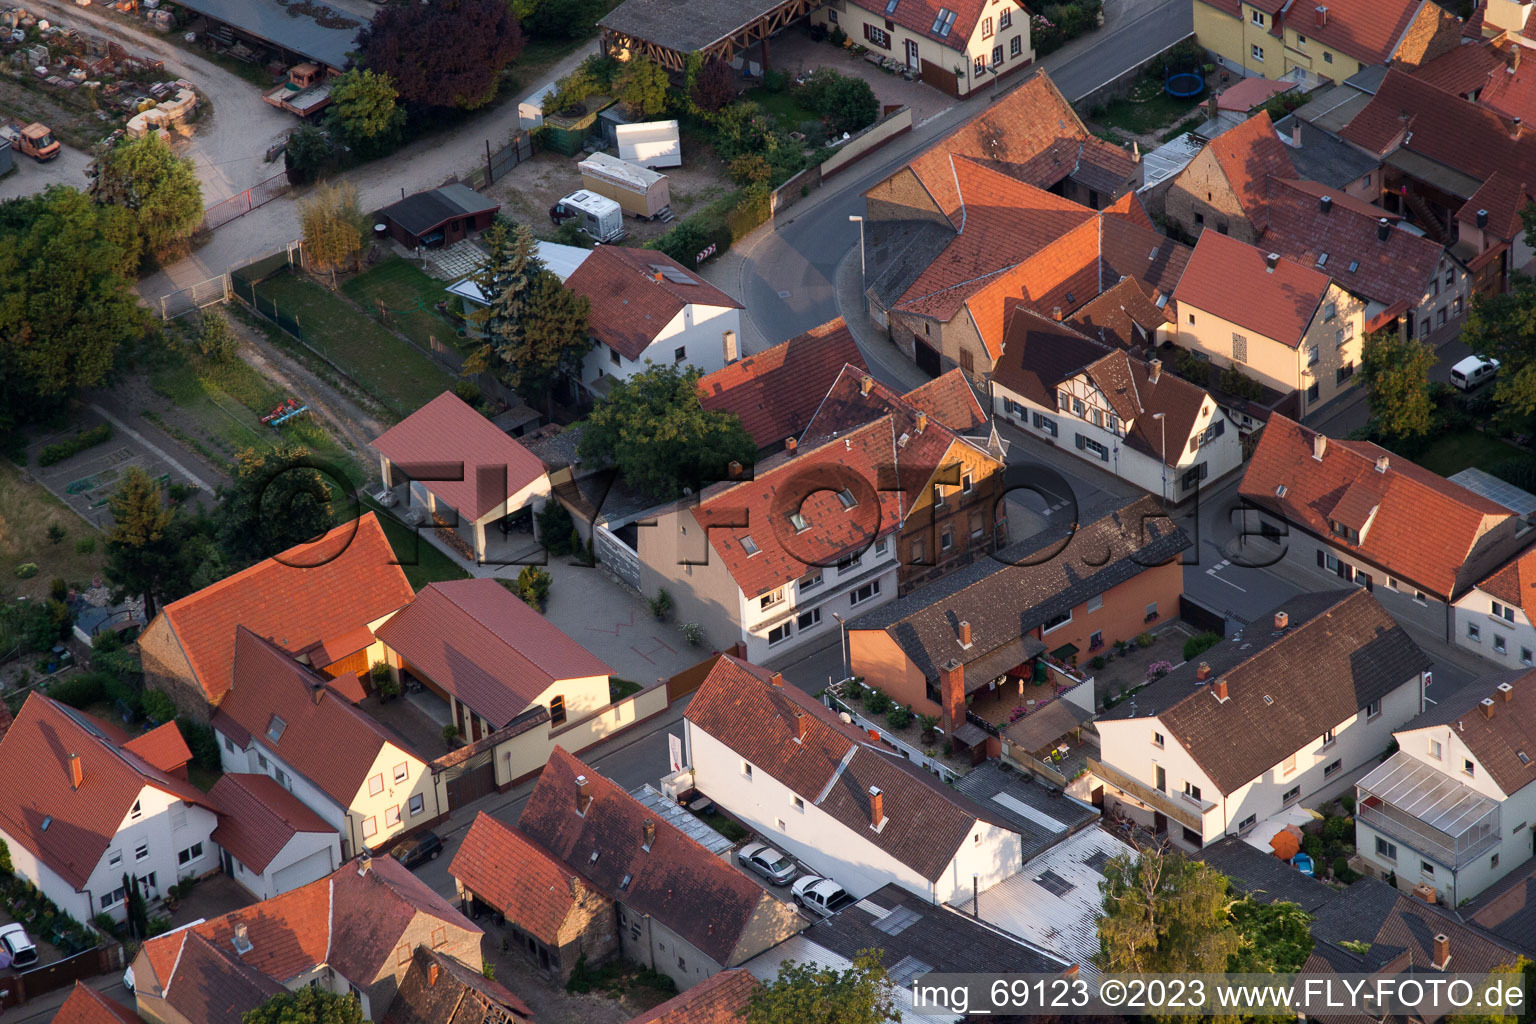 District Bobenheim in Bobenheim-Roxheim in the state Rhineland-Palatinate, Germany from the drone perspective